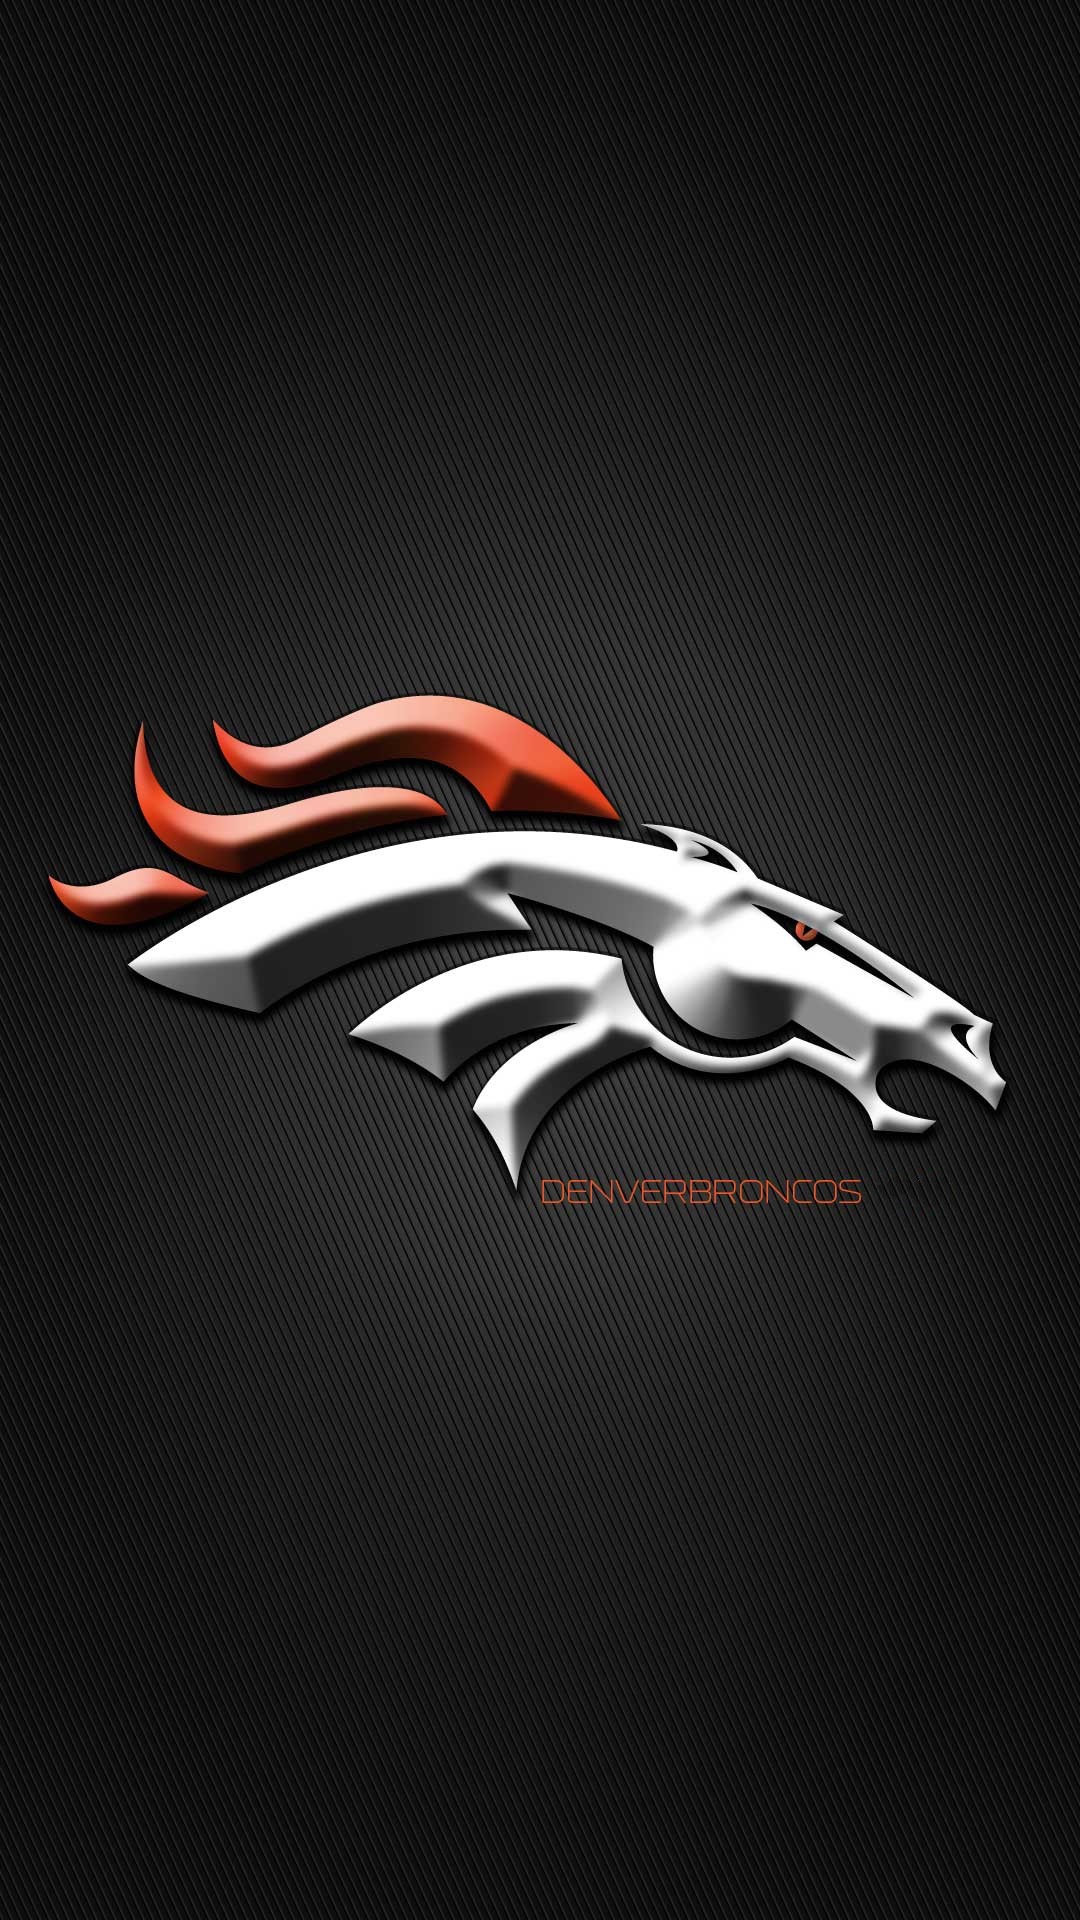 1080x1920 Denver Broncos iPhone 5 HD Wallpaper.